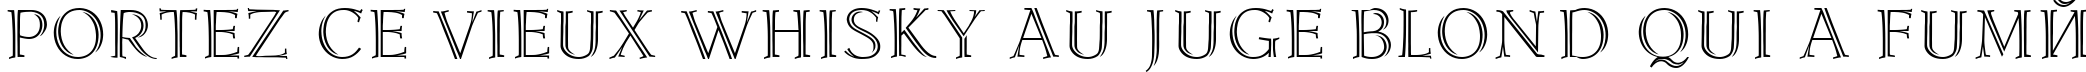 Пример написания шрифтом Lidia Medium текста на французском